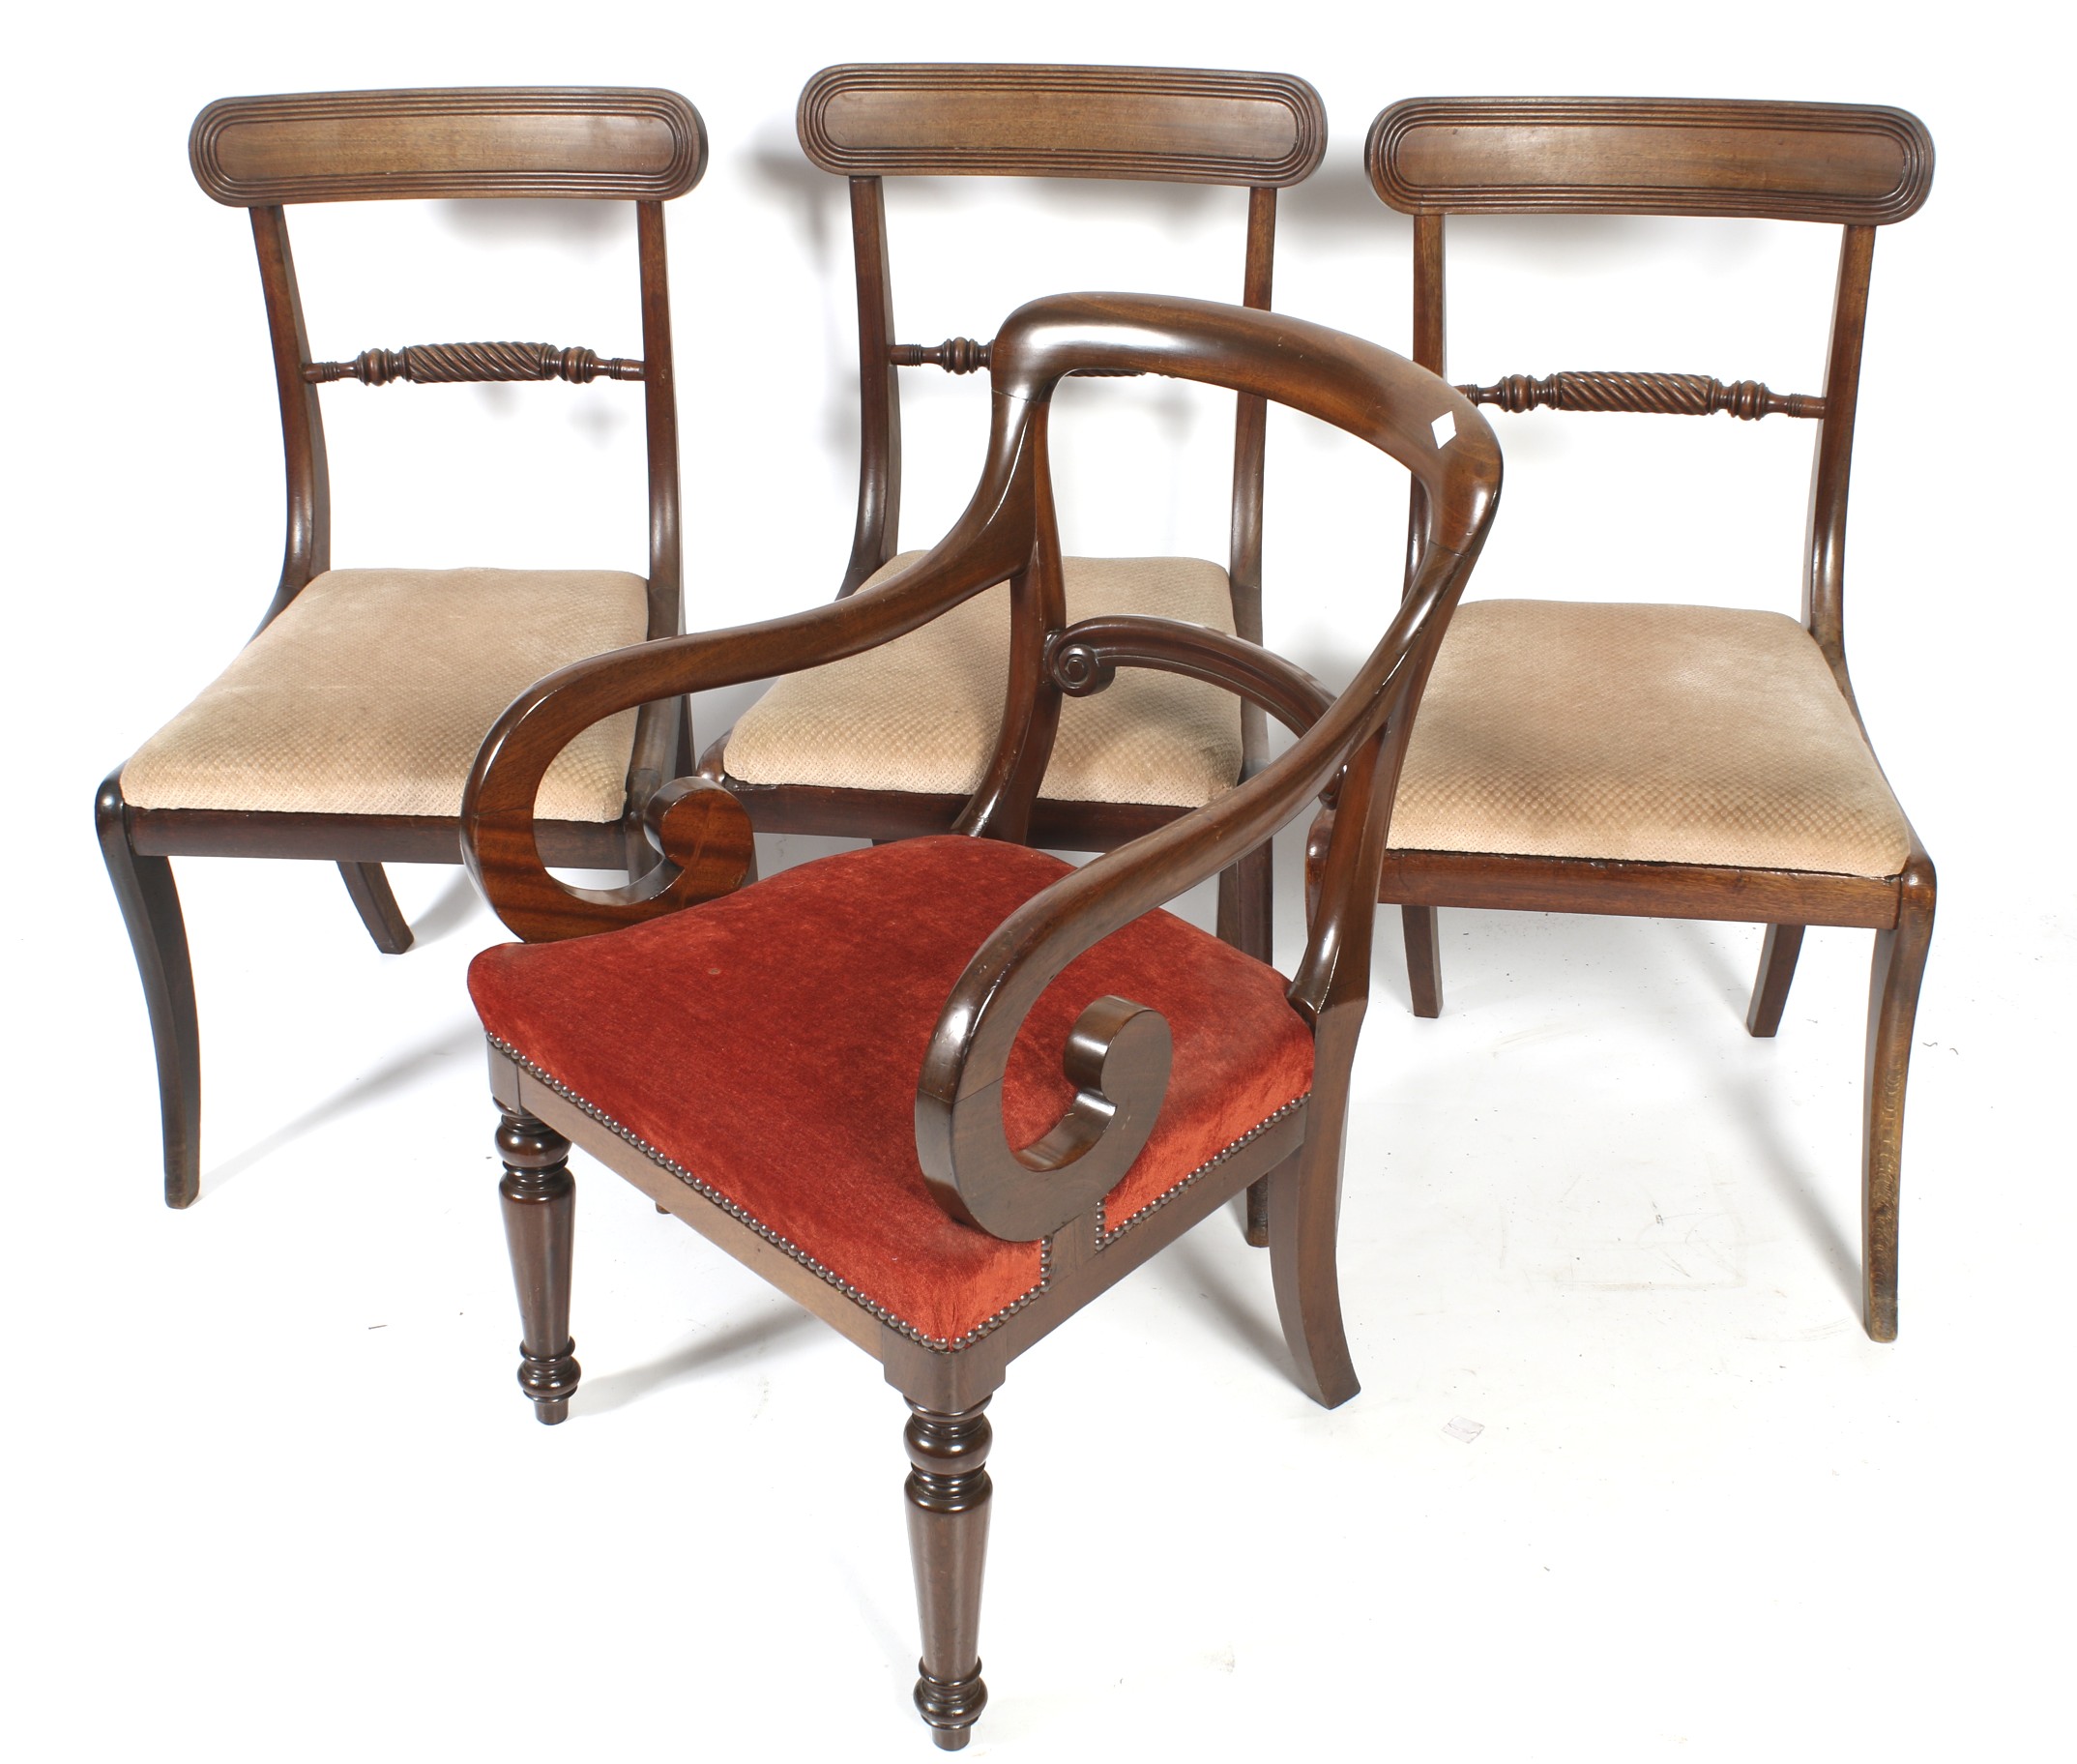 Four 19th century mahogany framed chairs.